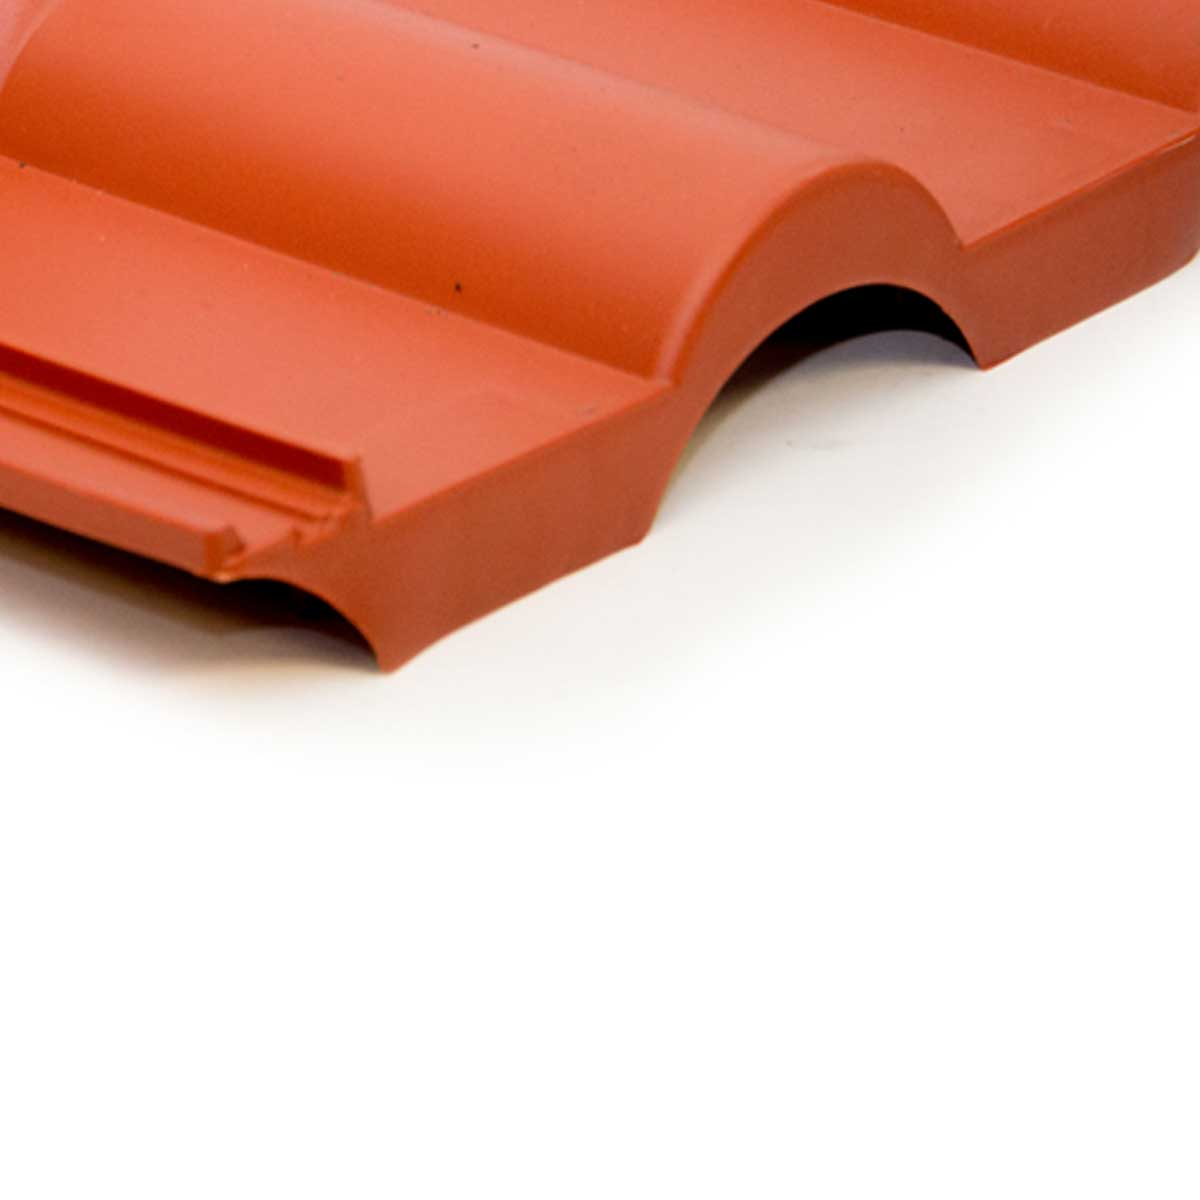 PREMIUMX Frankfurter Dachpfanne PVC Dachabdeckung, Kunststoff Dachziegel Rot Rot Dachabdeckung